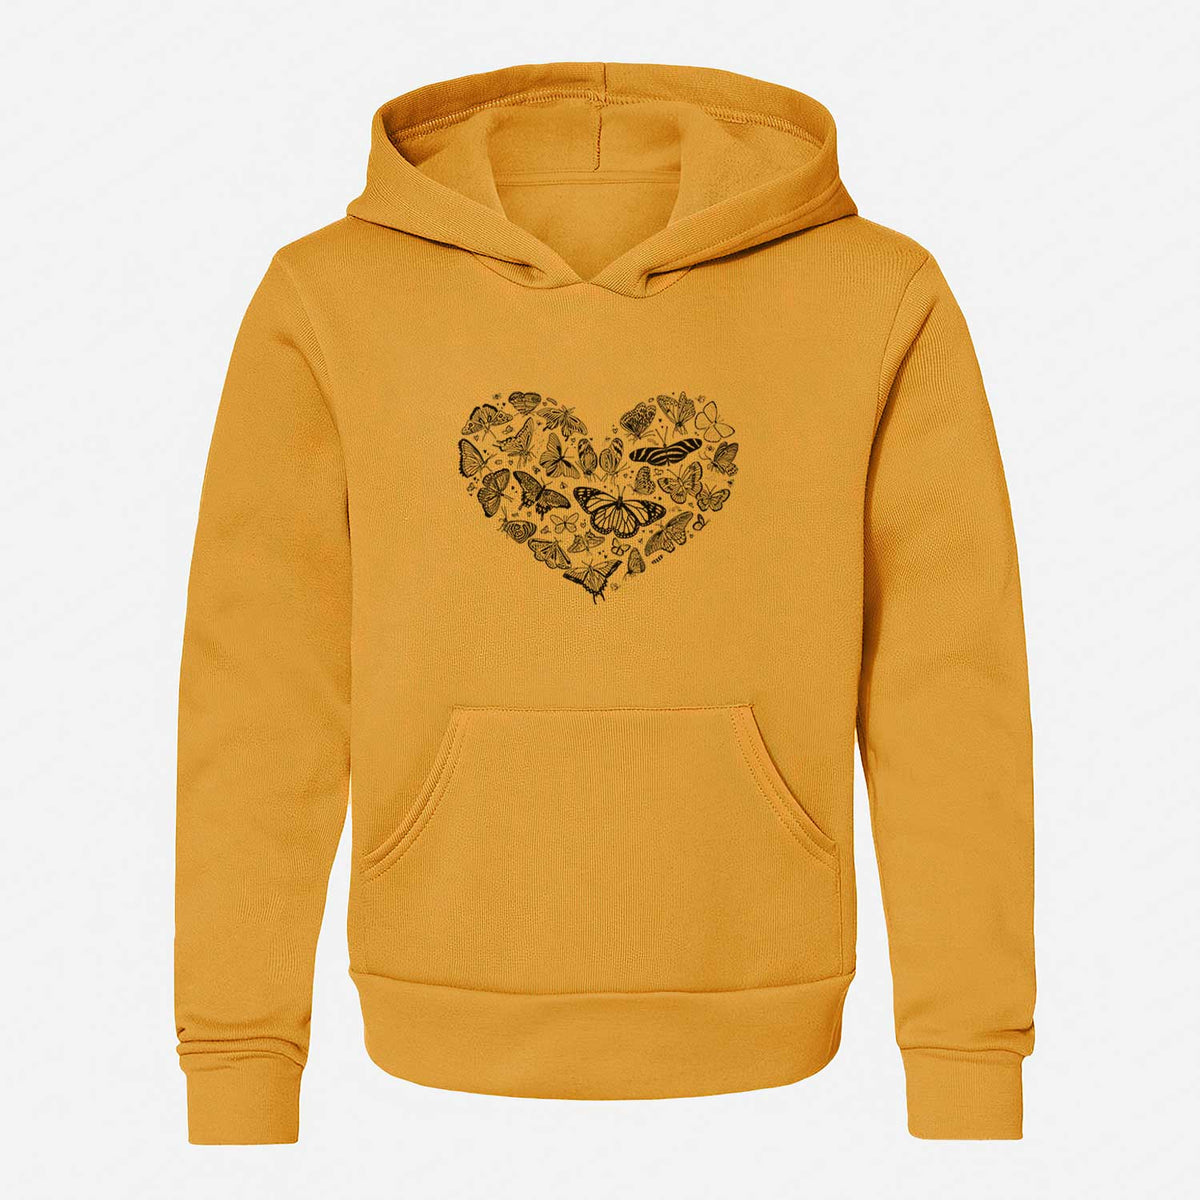 Heart Full of Butterflies - Youth Hoodie Sweatshirt